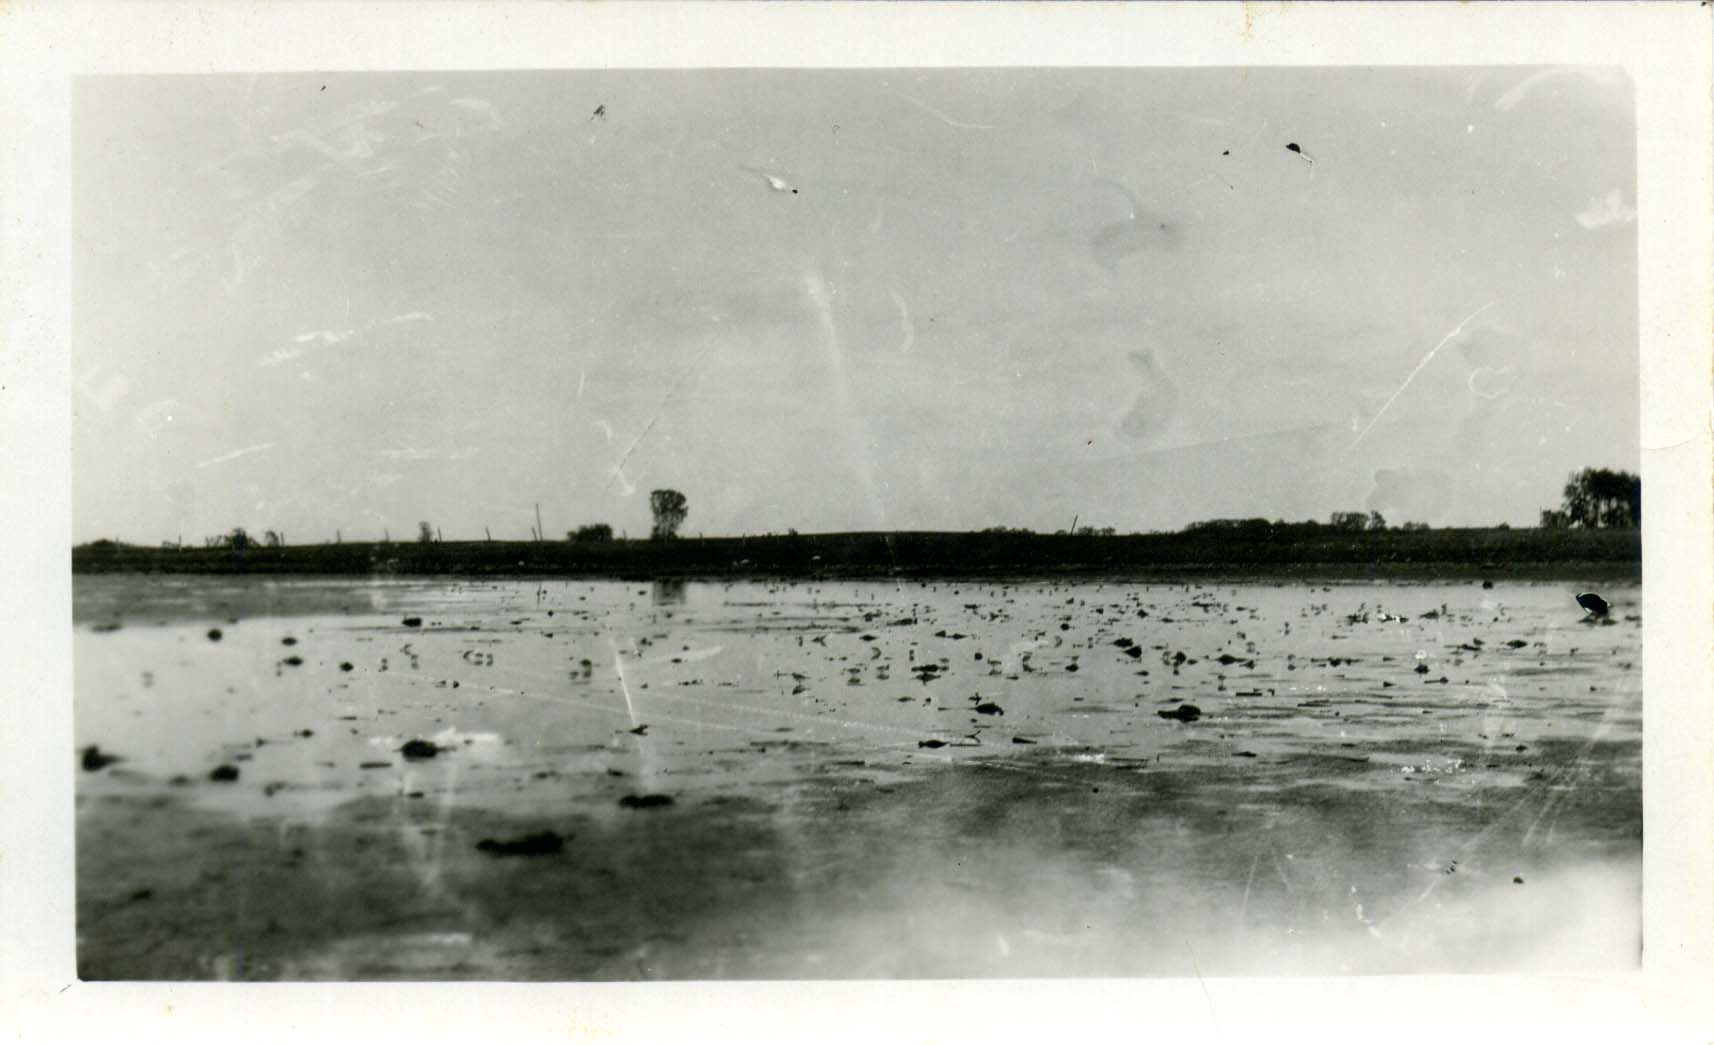 Photograph of shore birds feeding on a pond